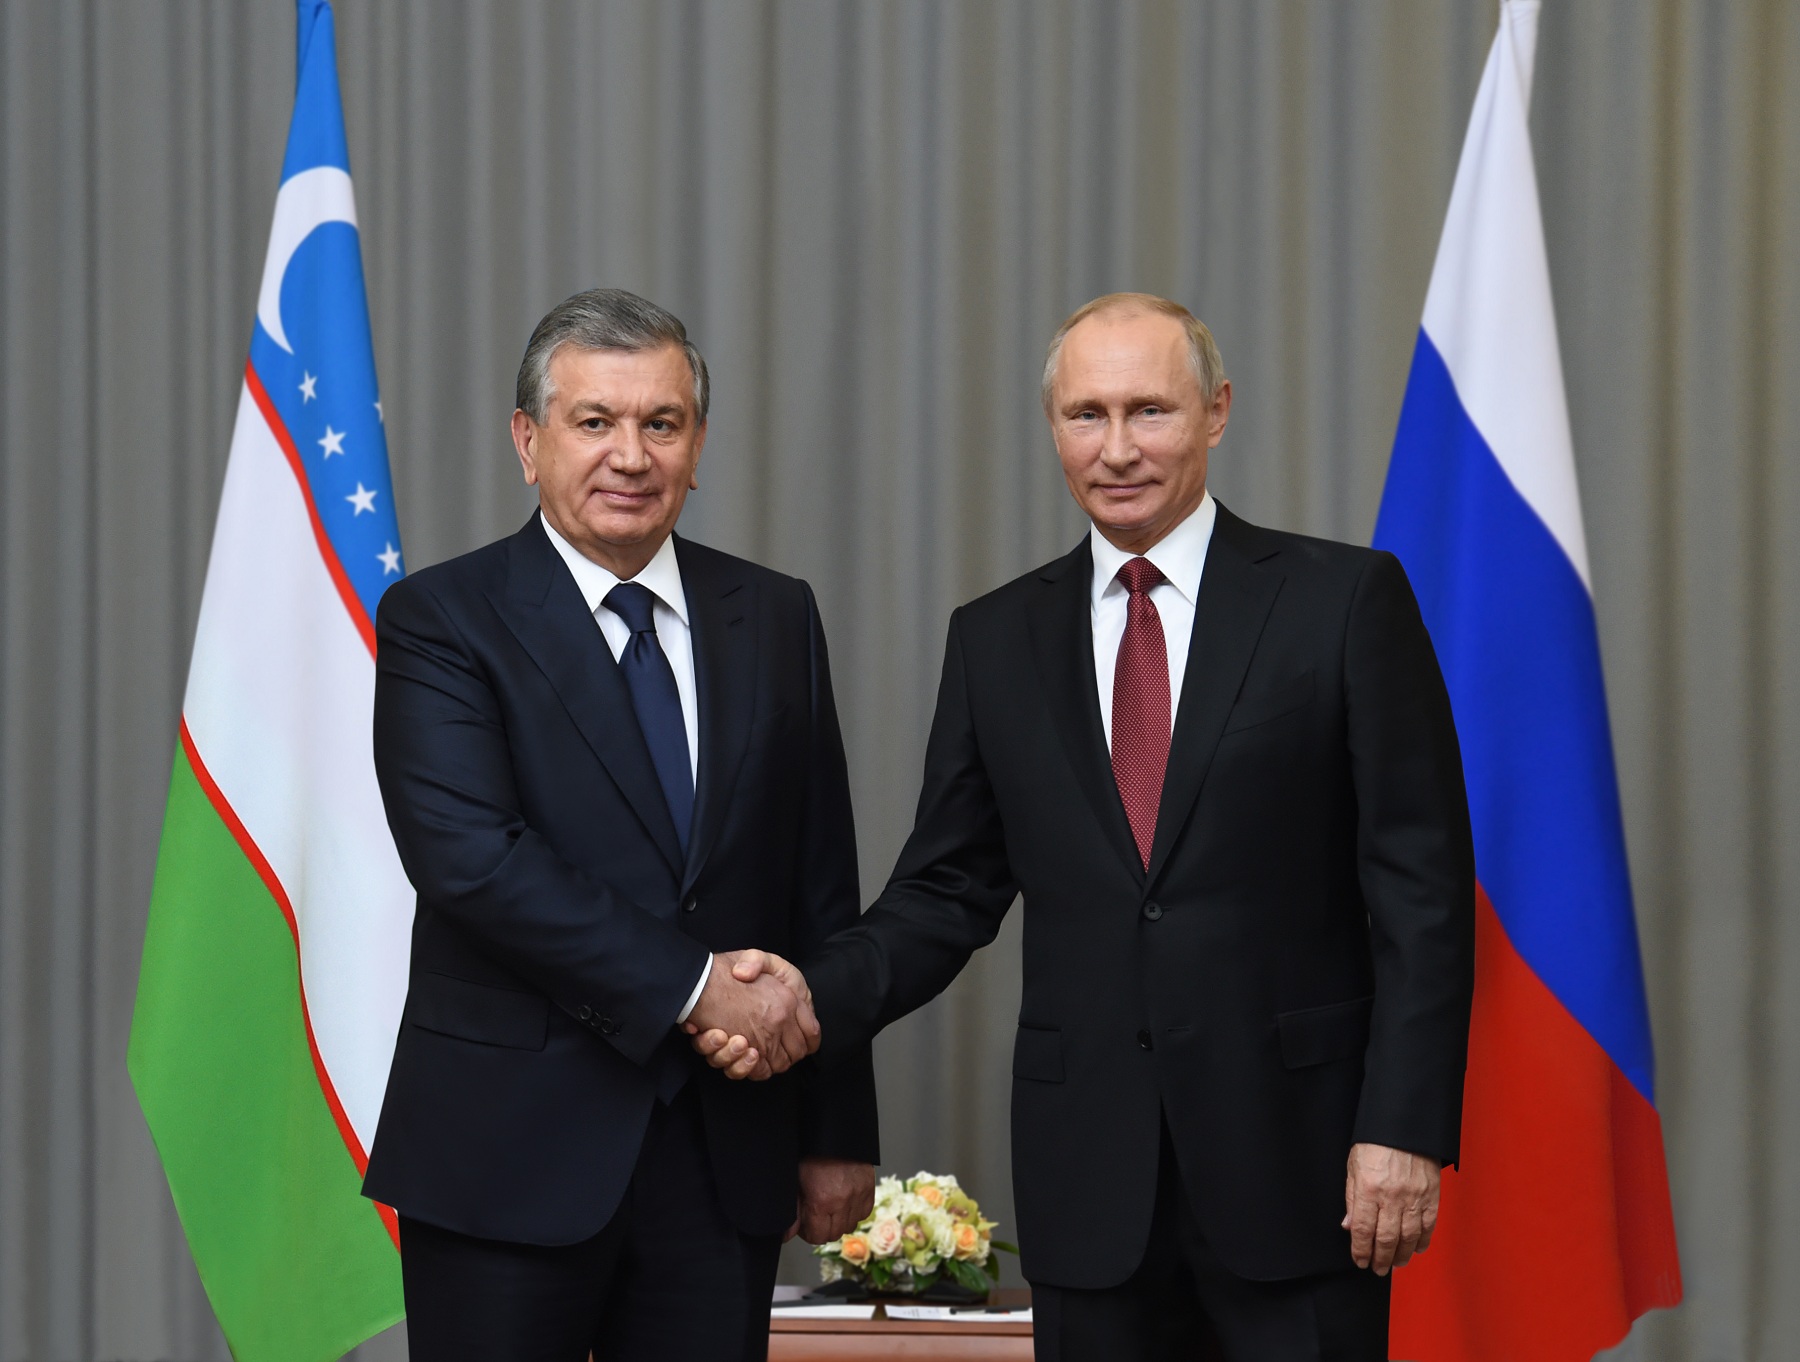 Rusiya vә Özbәkistan prezidentlәri arasında telefon danışığı olub